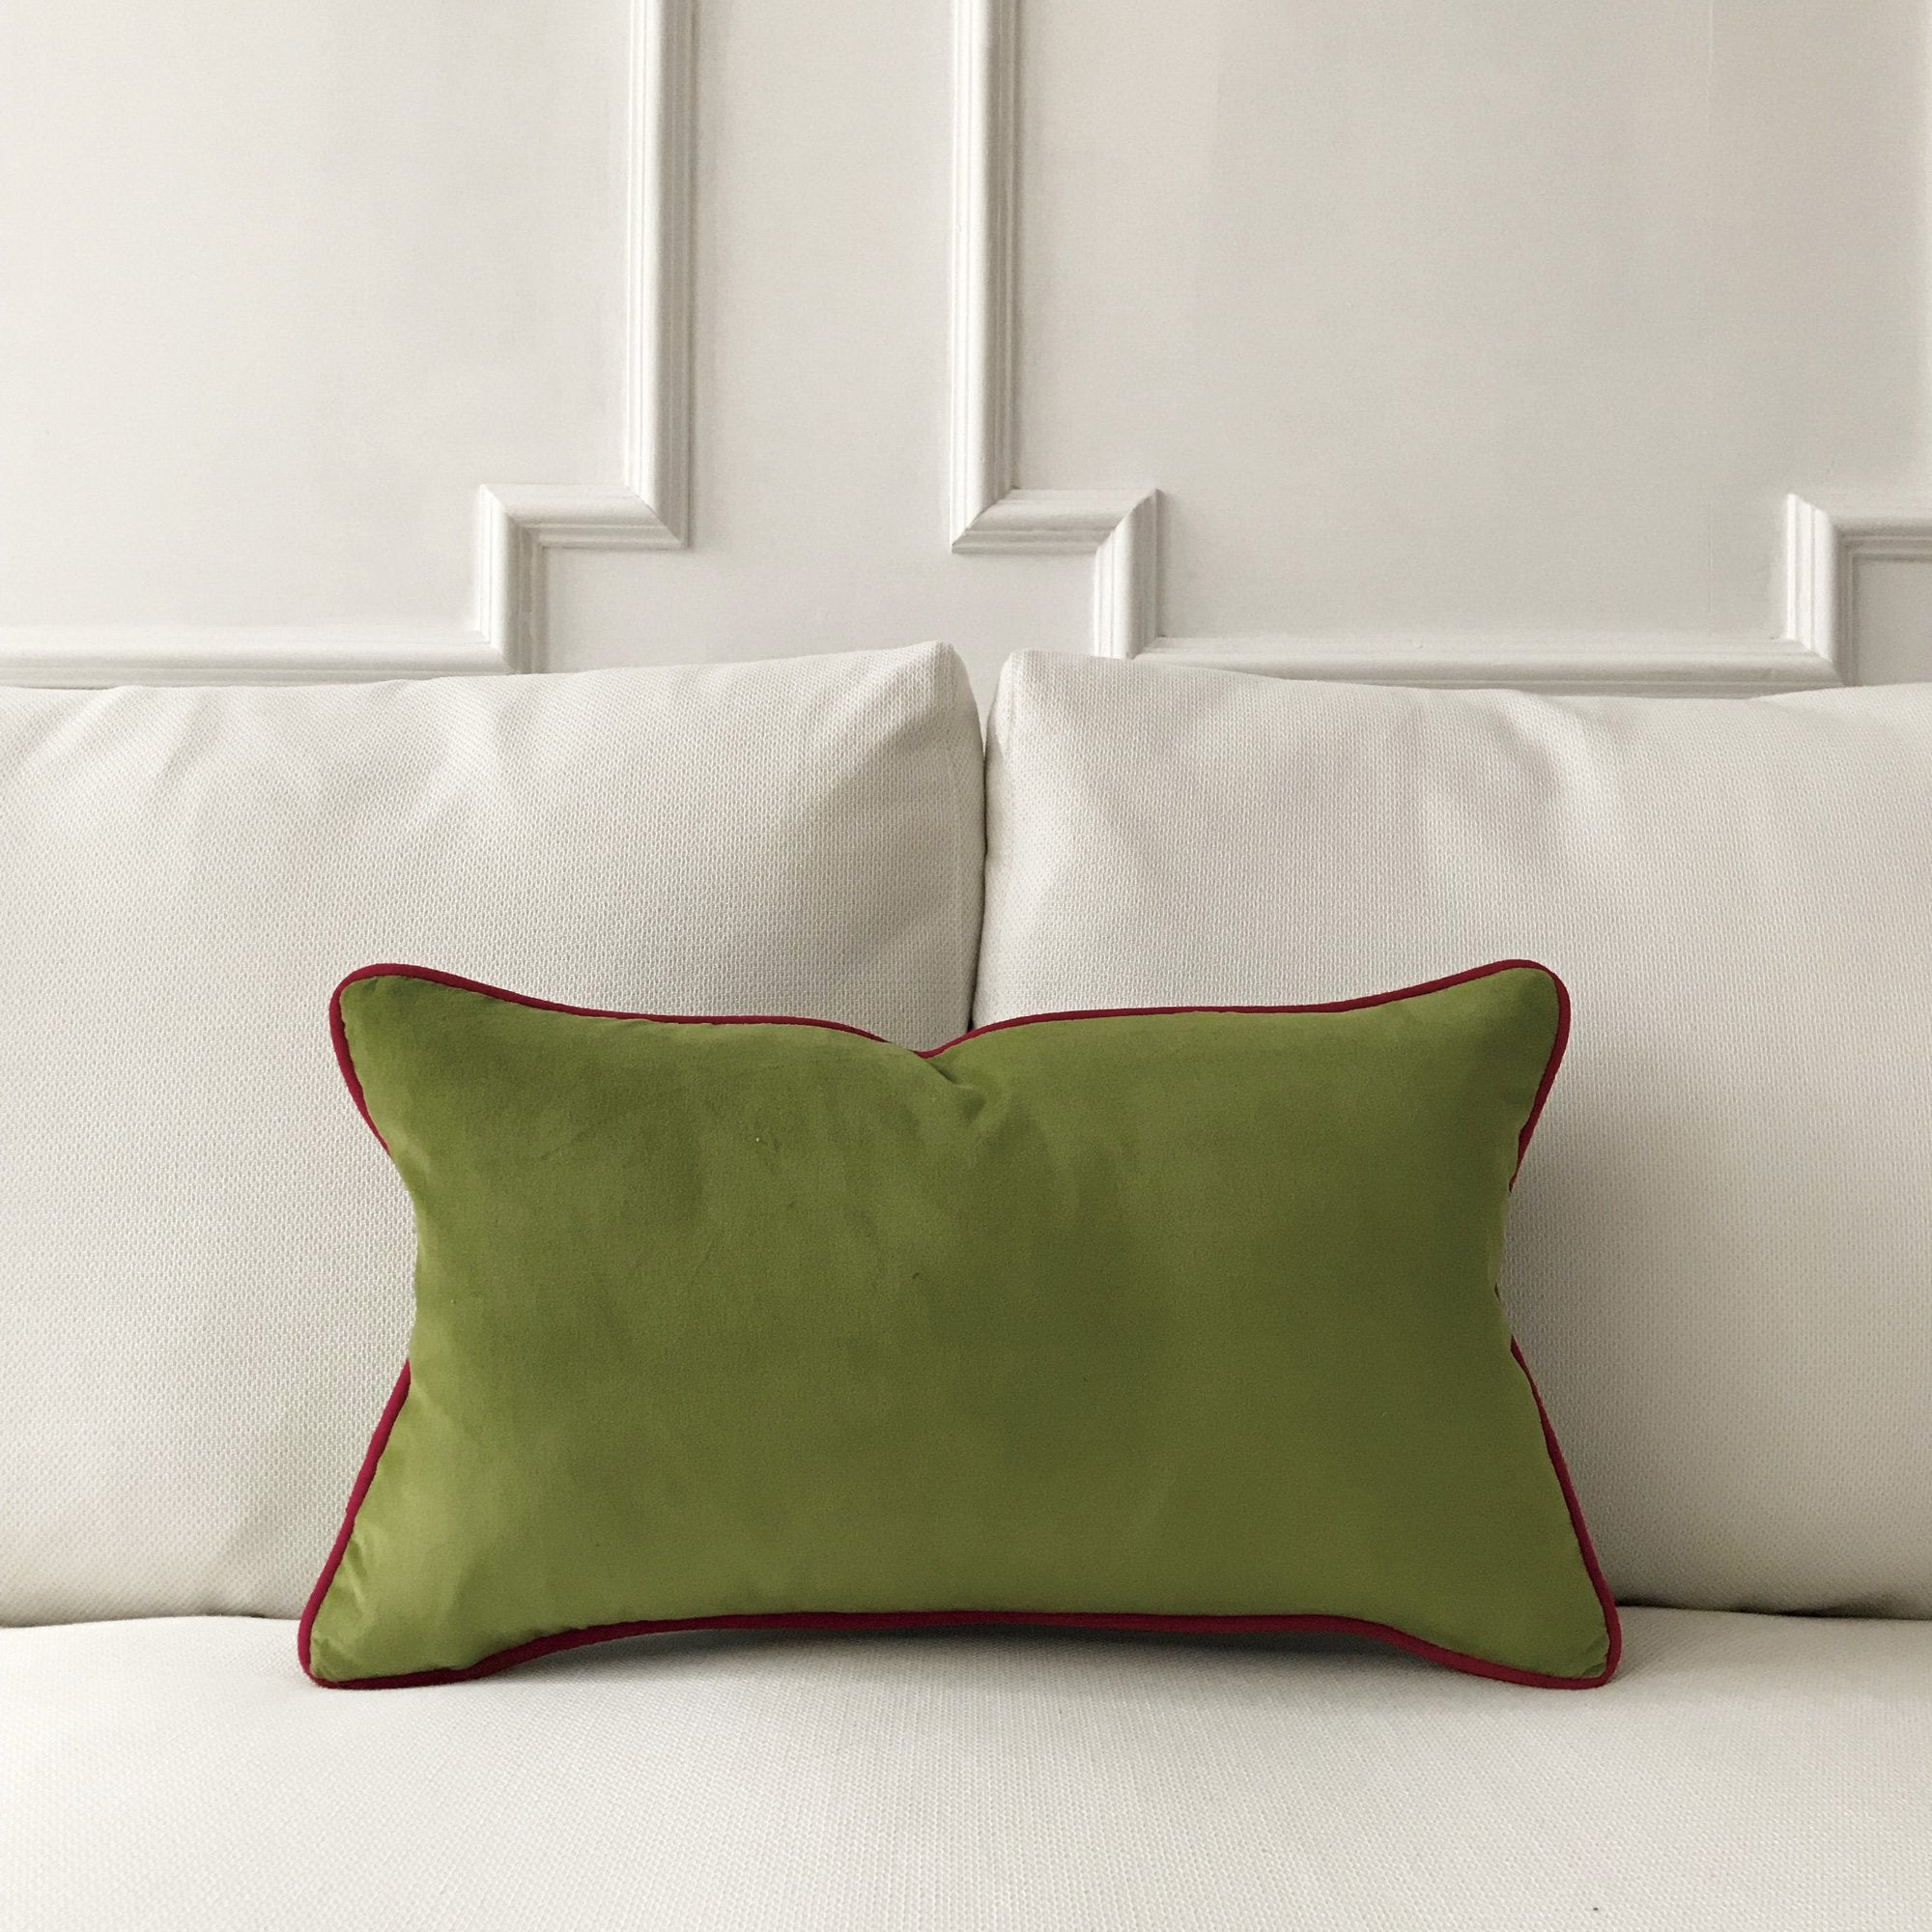 Solid White - Lumbar Pillow - Decorative Accent Pillow, Throw Pillow,  Pillow Cover, Pillow Case - RECTANGLE - 13 x 22 - Zipper Closure